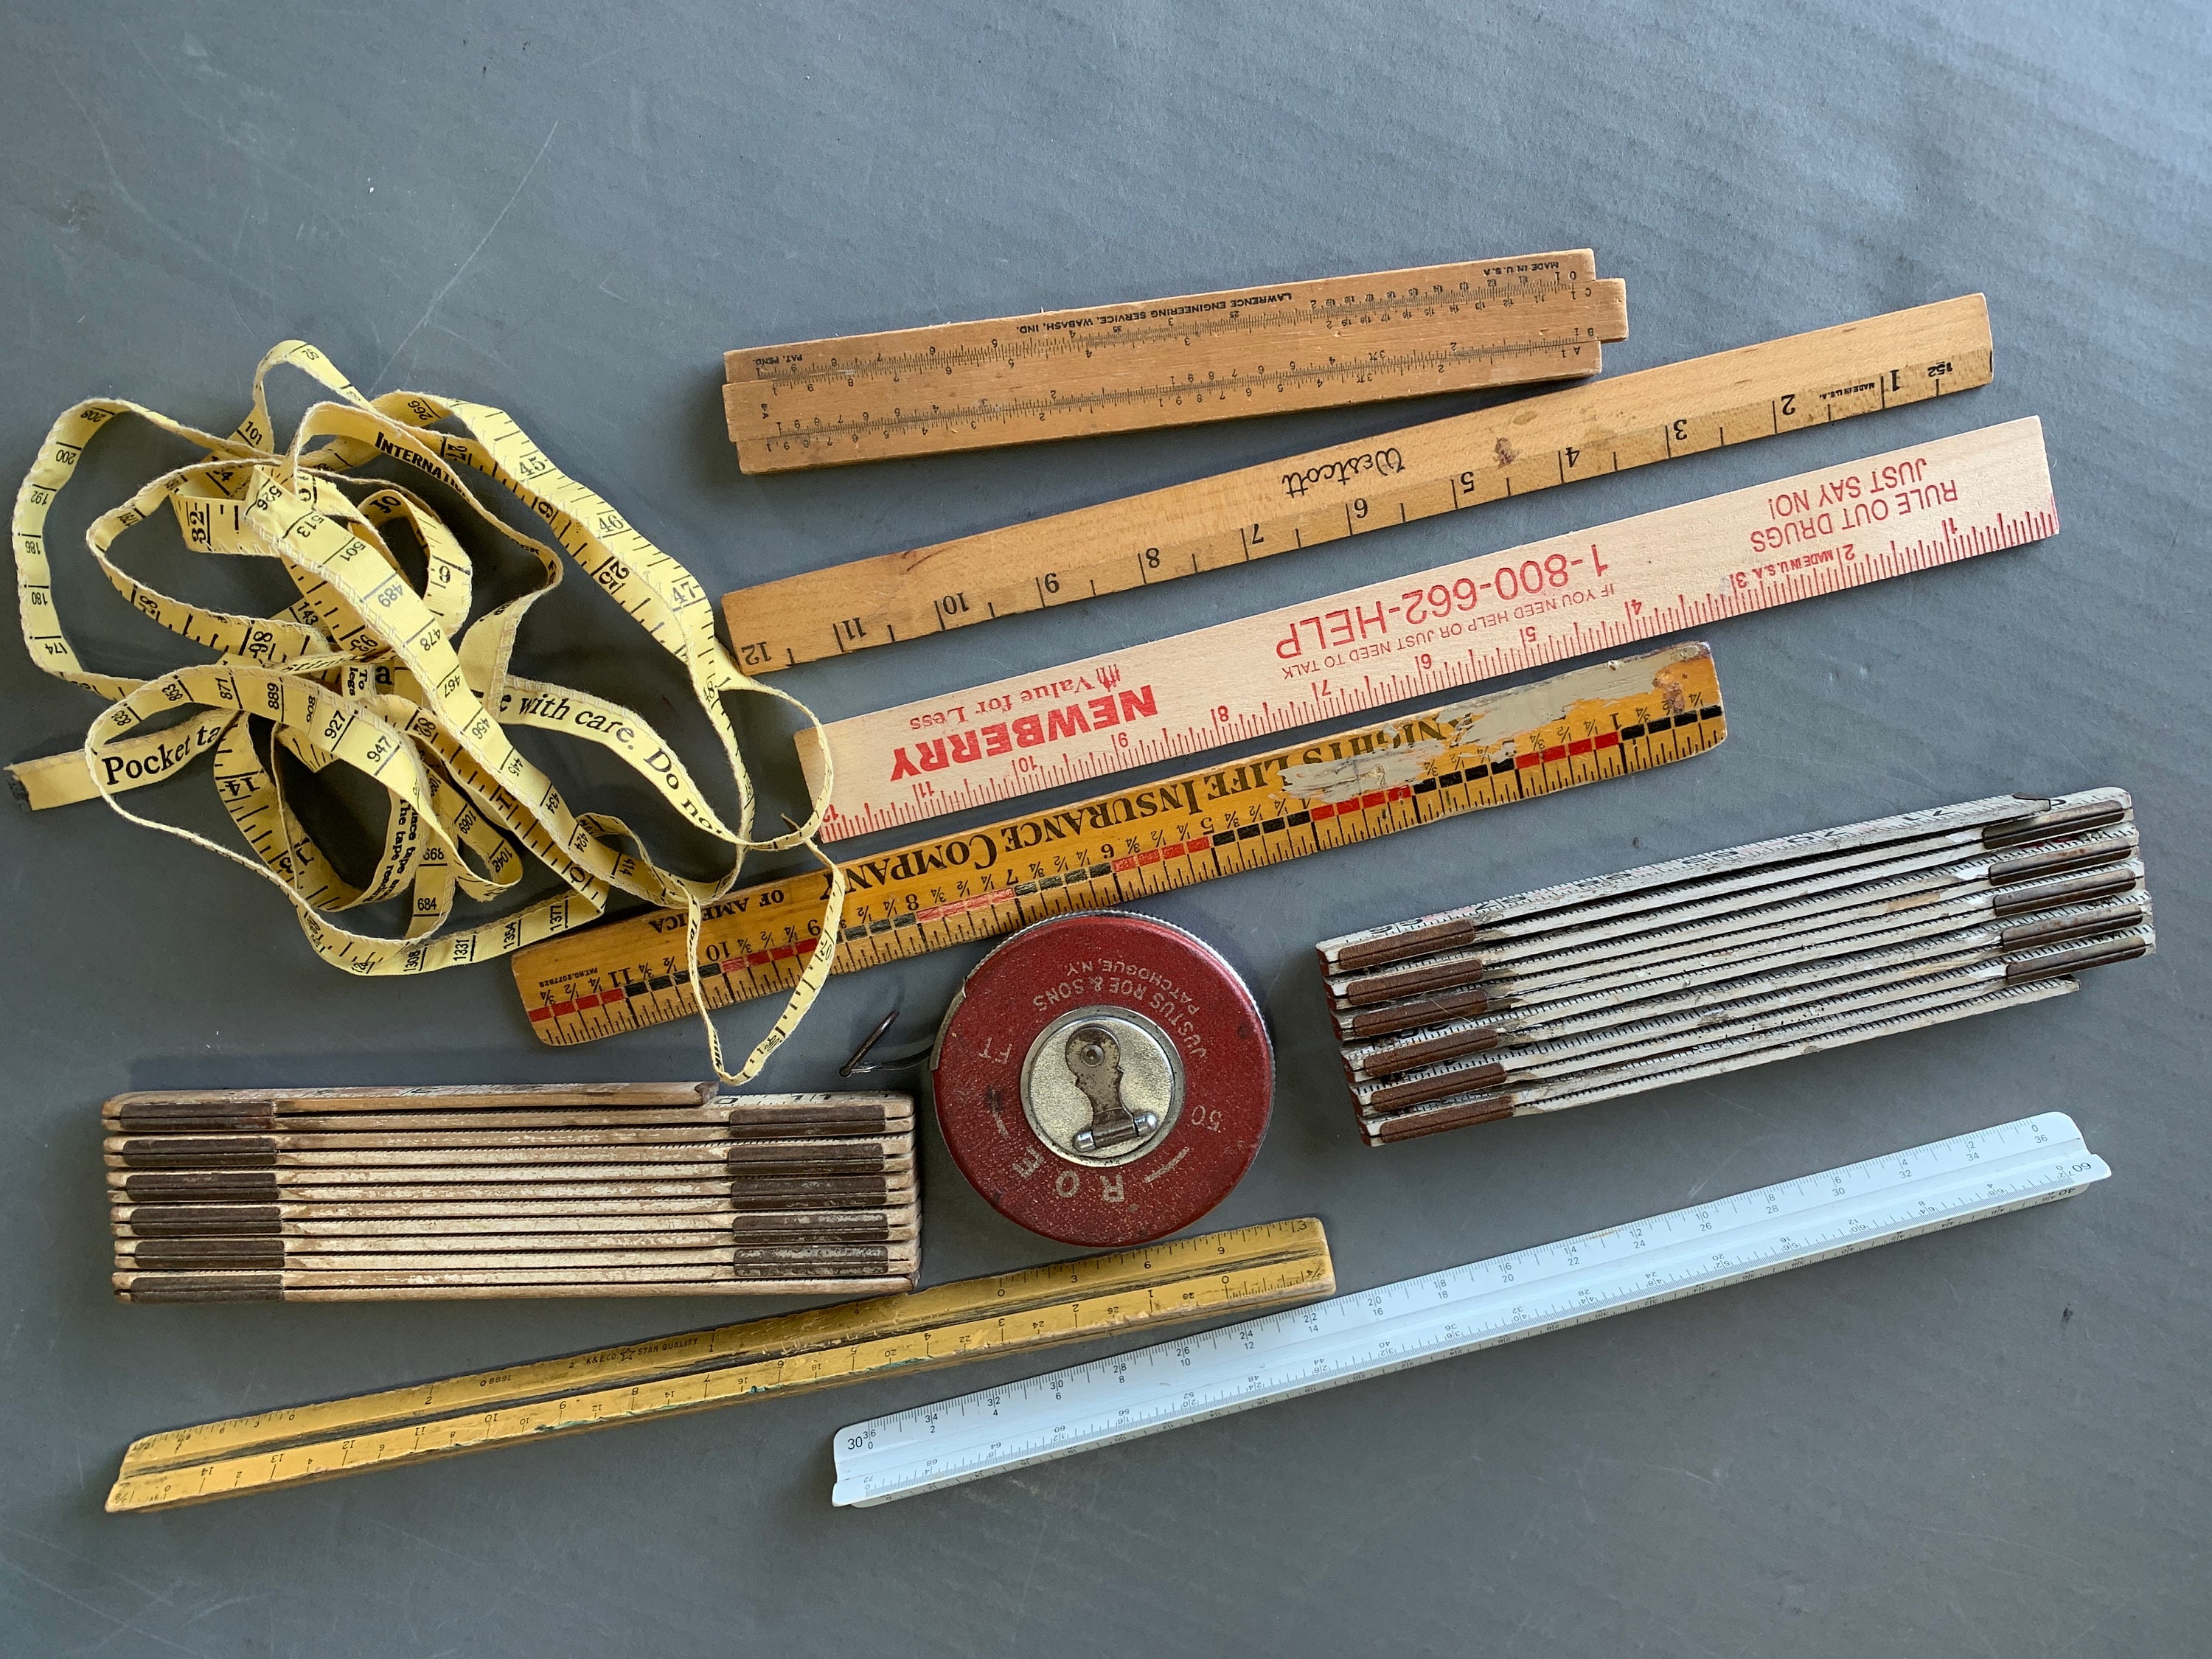 1M 2M 10-parts Folding Carpenters Ruler Lightweight Compact Measuring Stick  Slide Fold Up for Woodworking